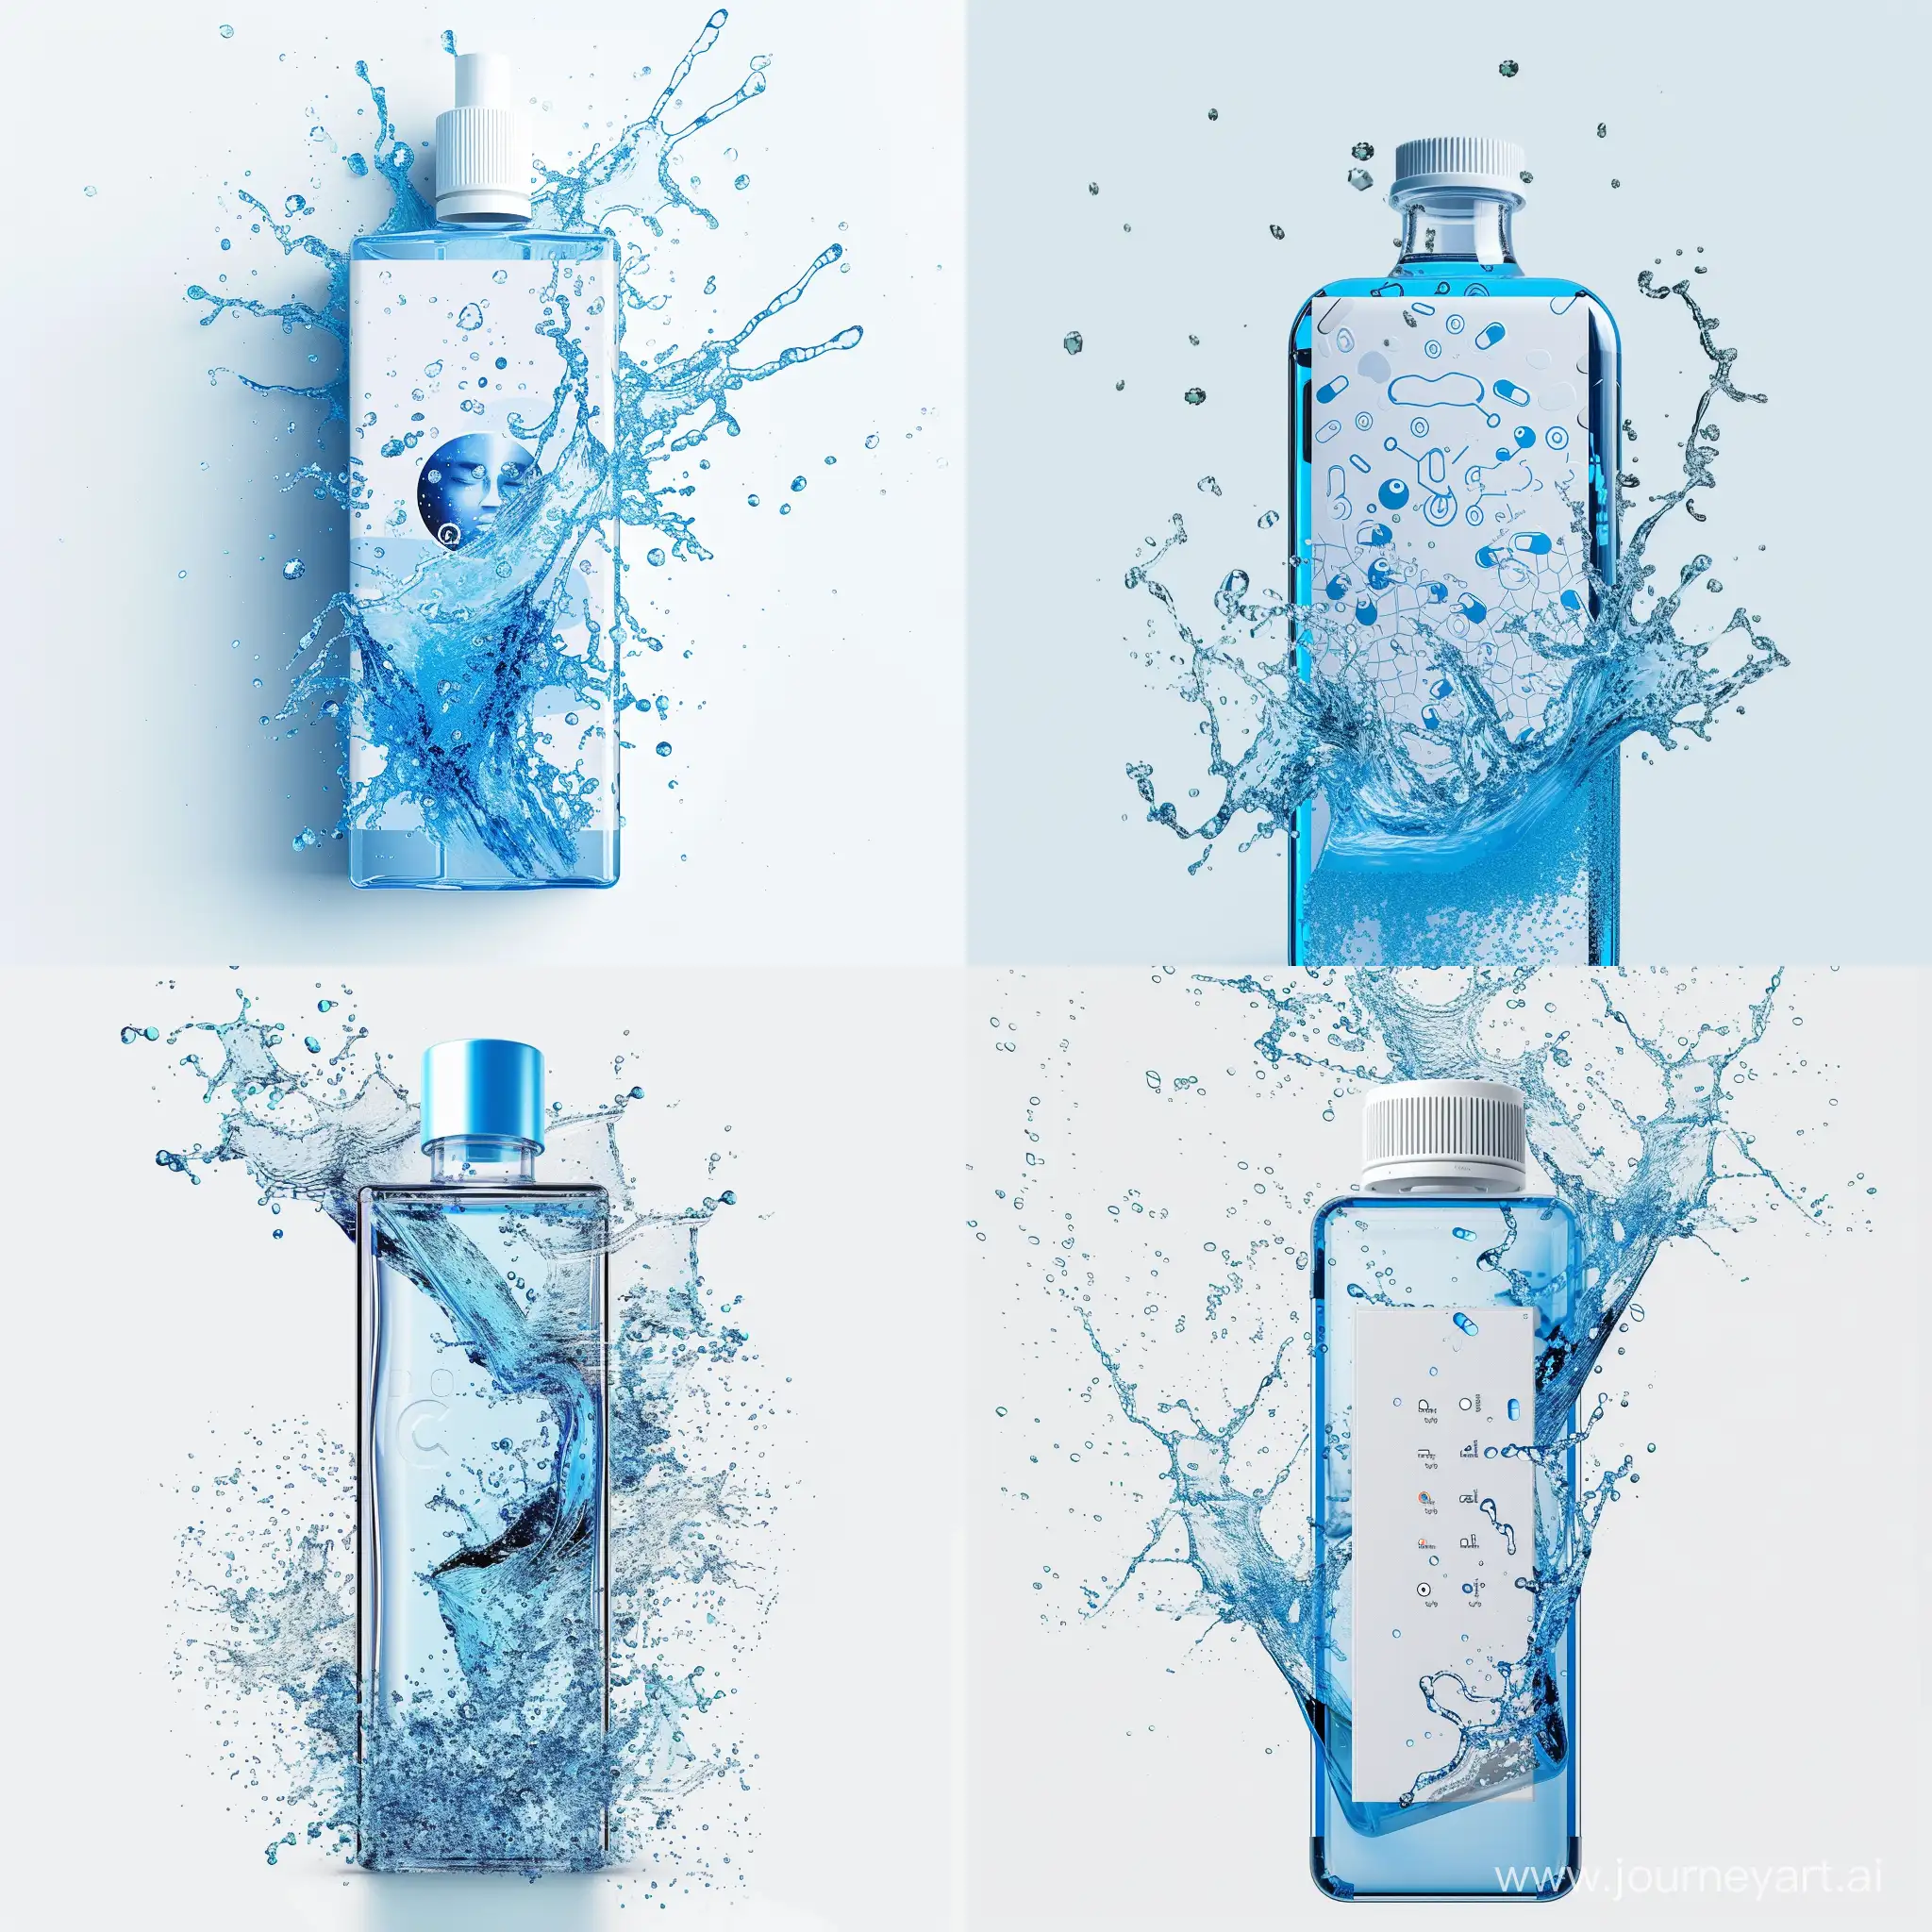 Innovative-Blue-Water-Splash-Beverage-Bottle-with-HighTech-Graphic-Design